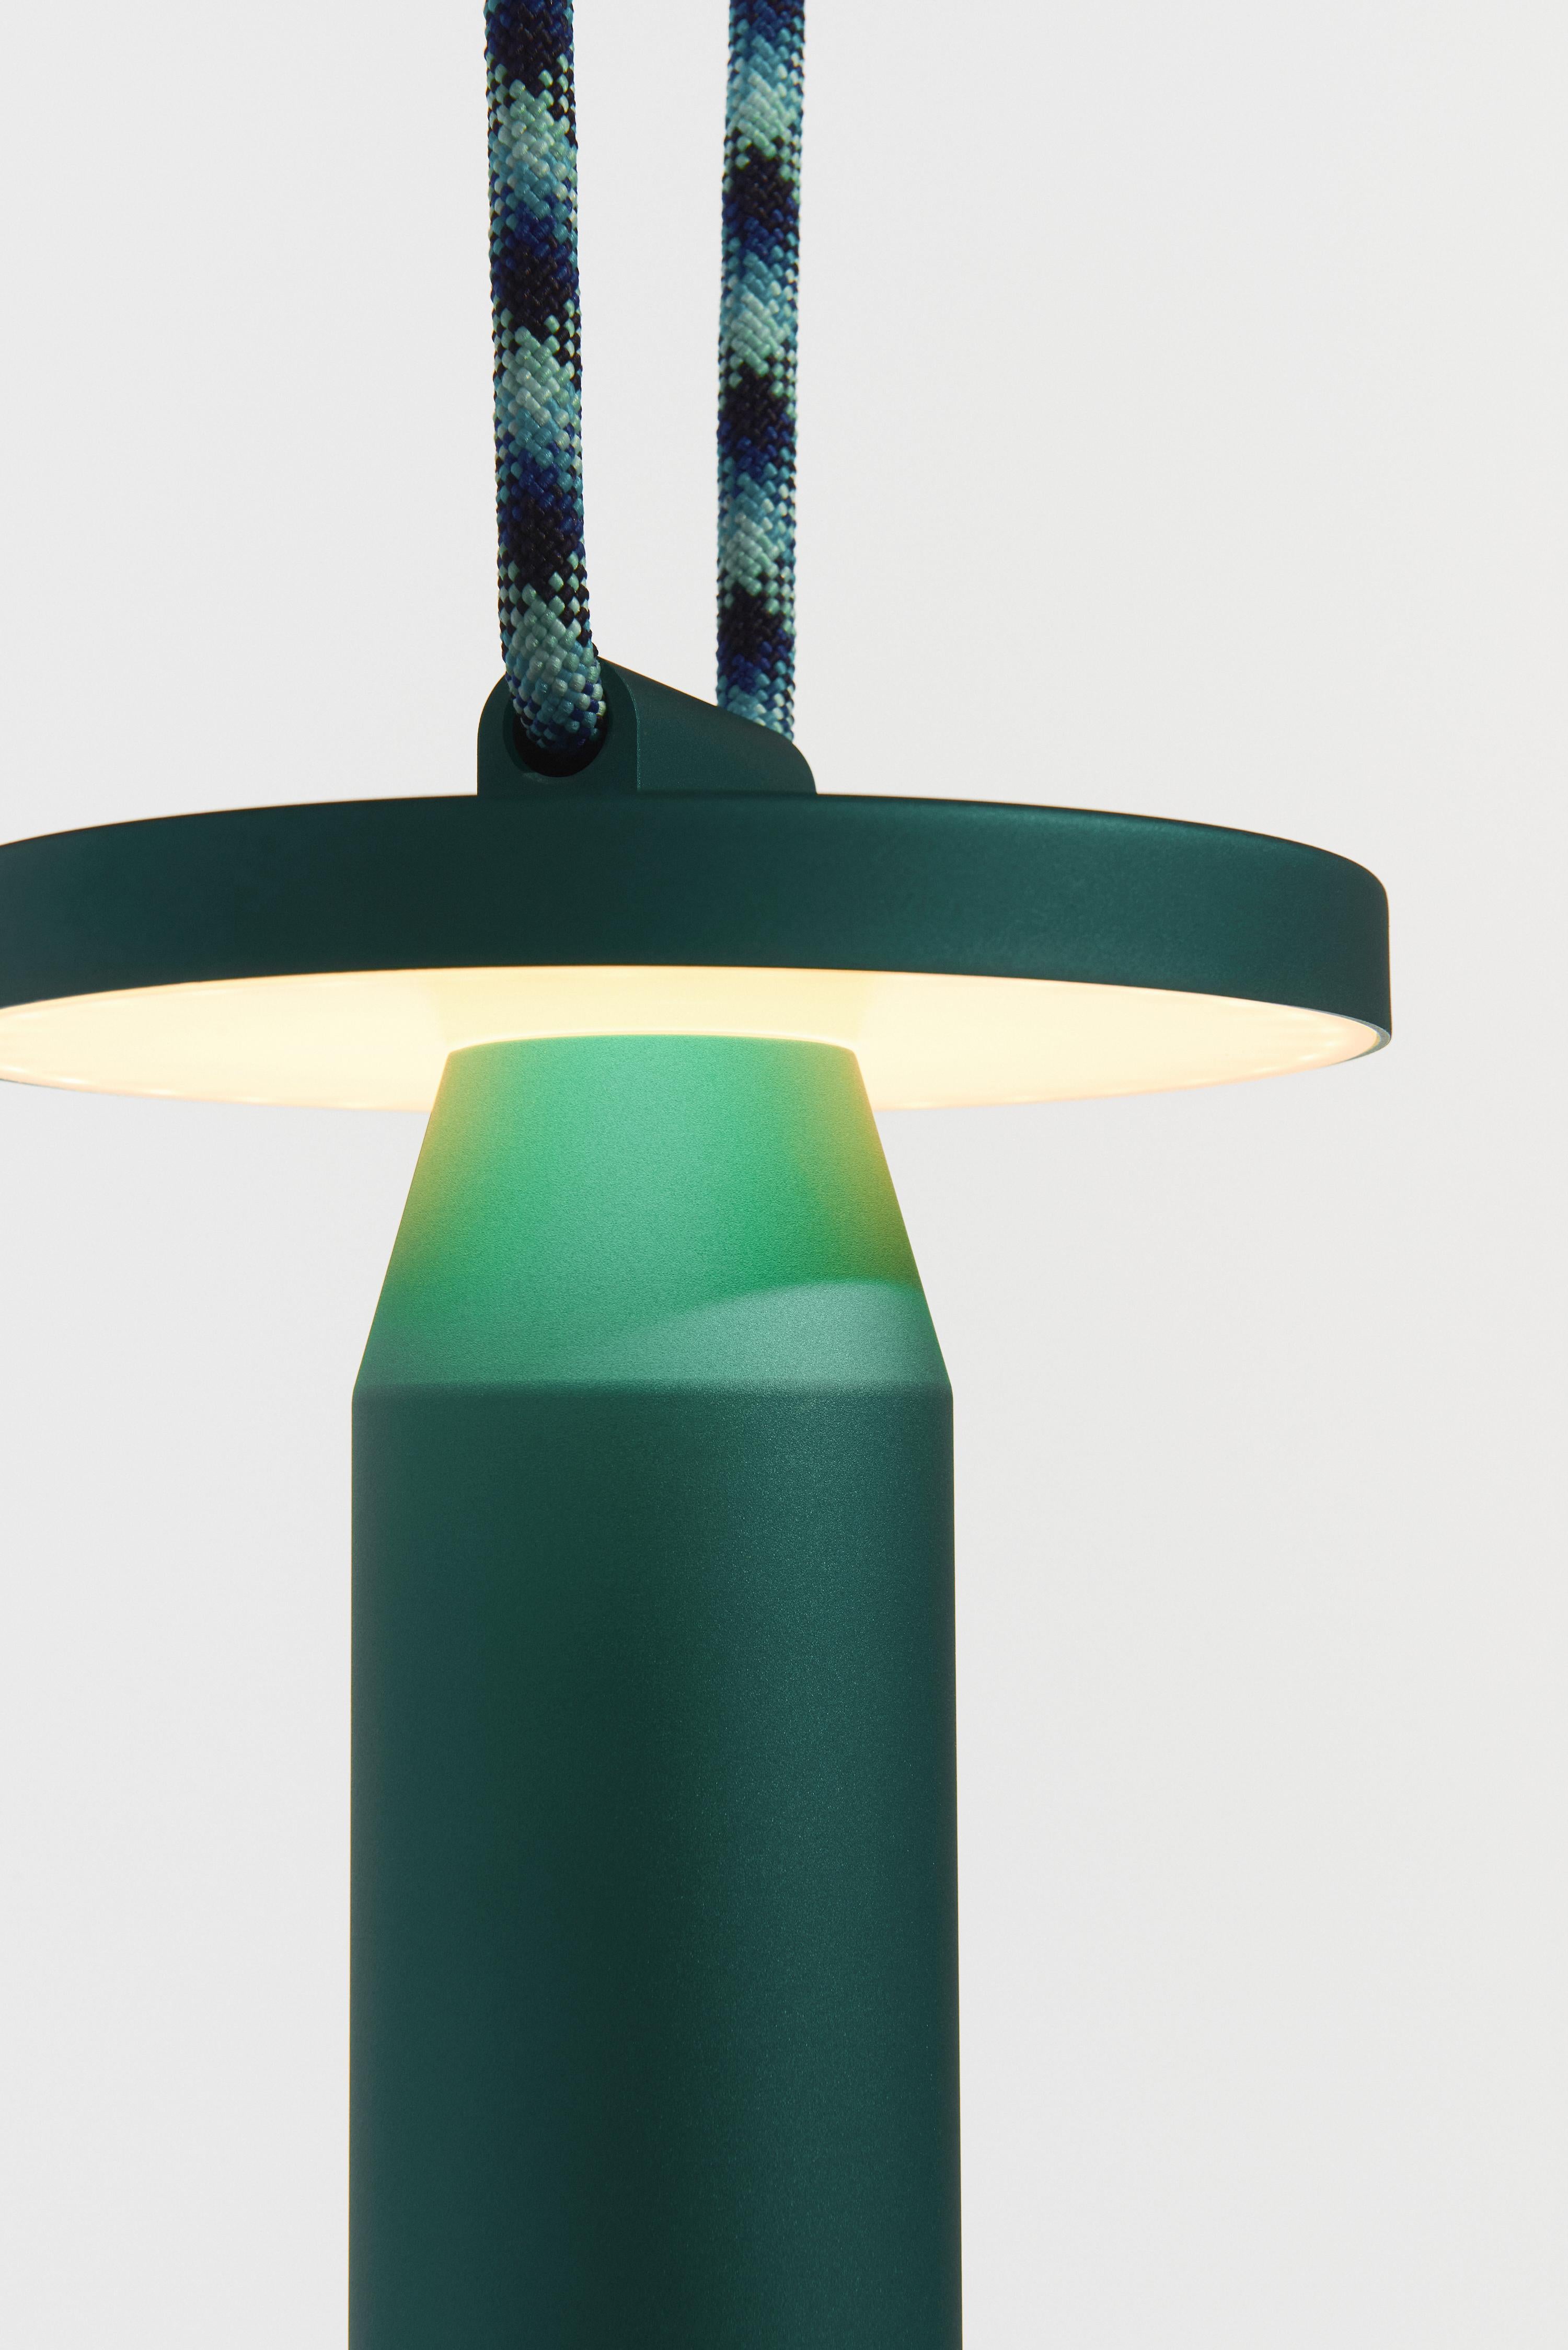 Petite Friture Quasar Portable Table Lamp in Emerald Green Aluminium by Samy Rio For Sale 2